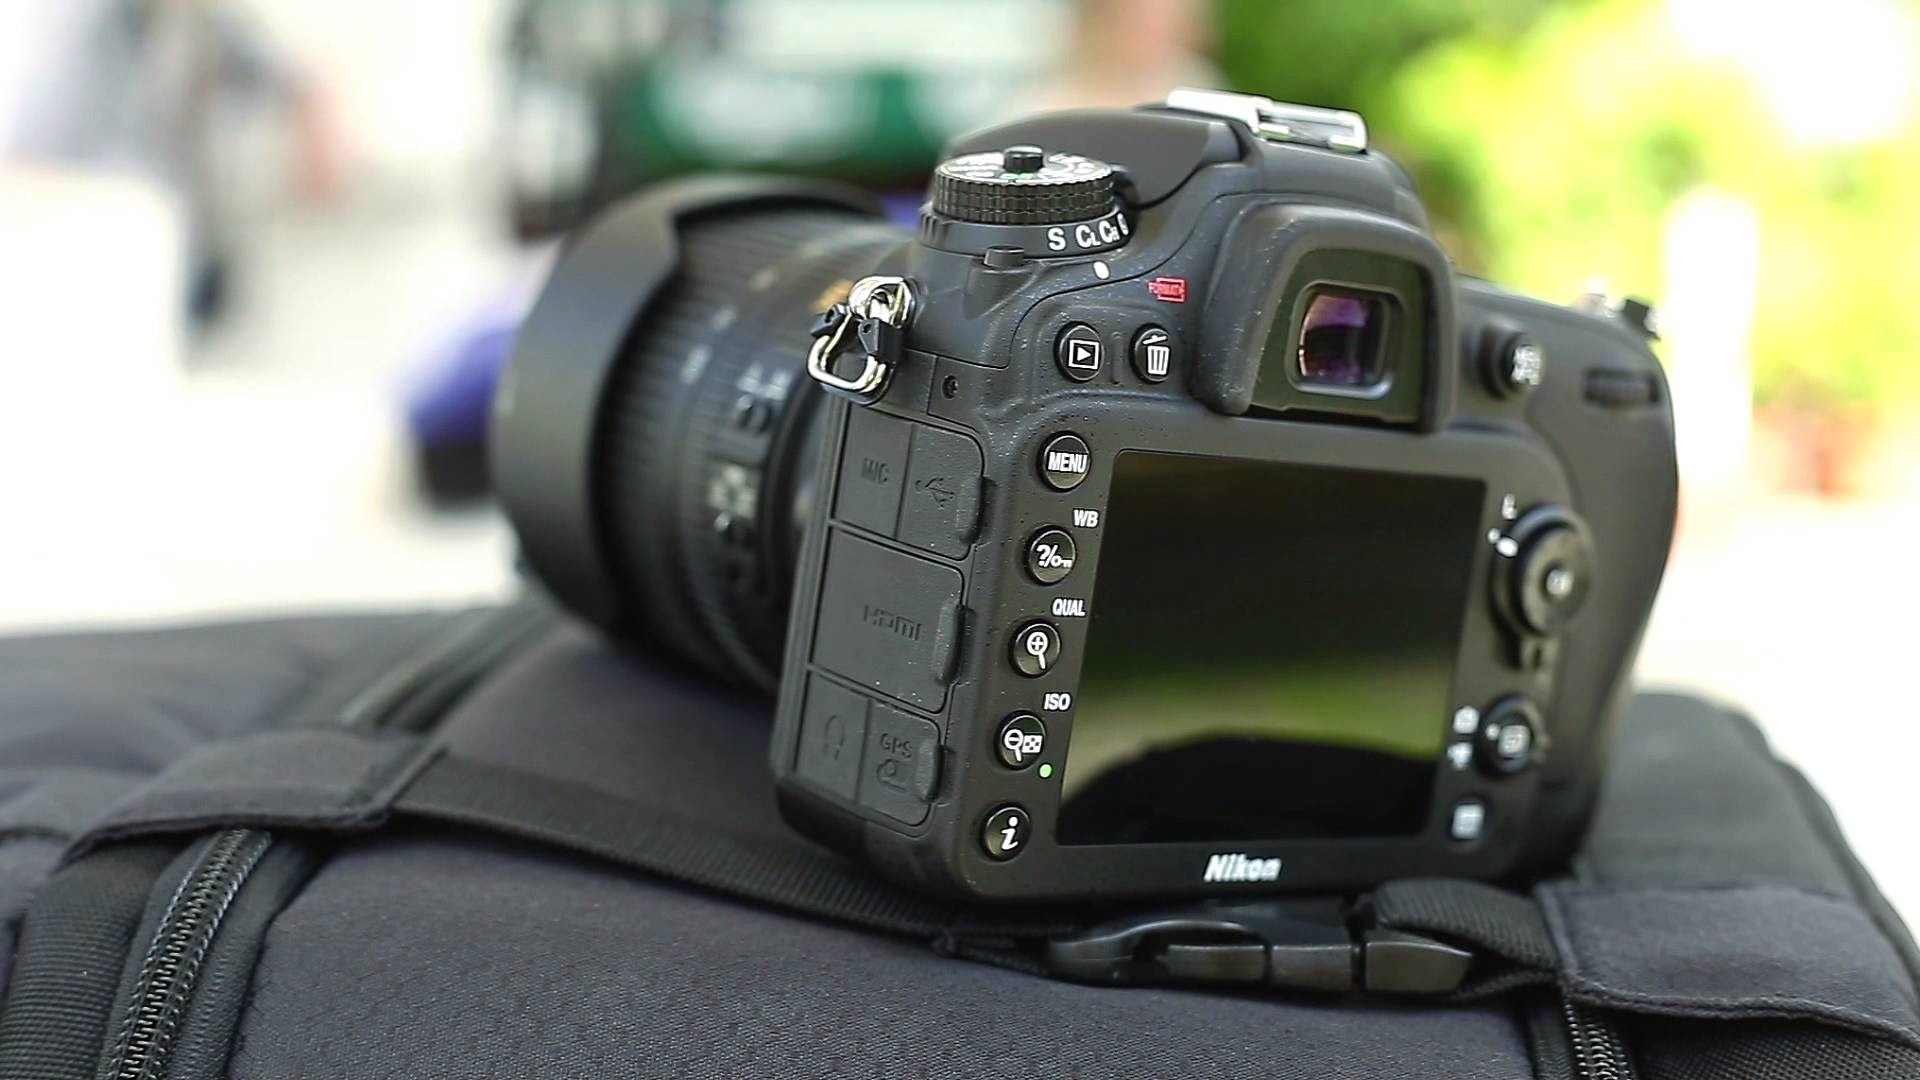 كيف تختار كاميرا SLR (DSLR)؟